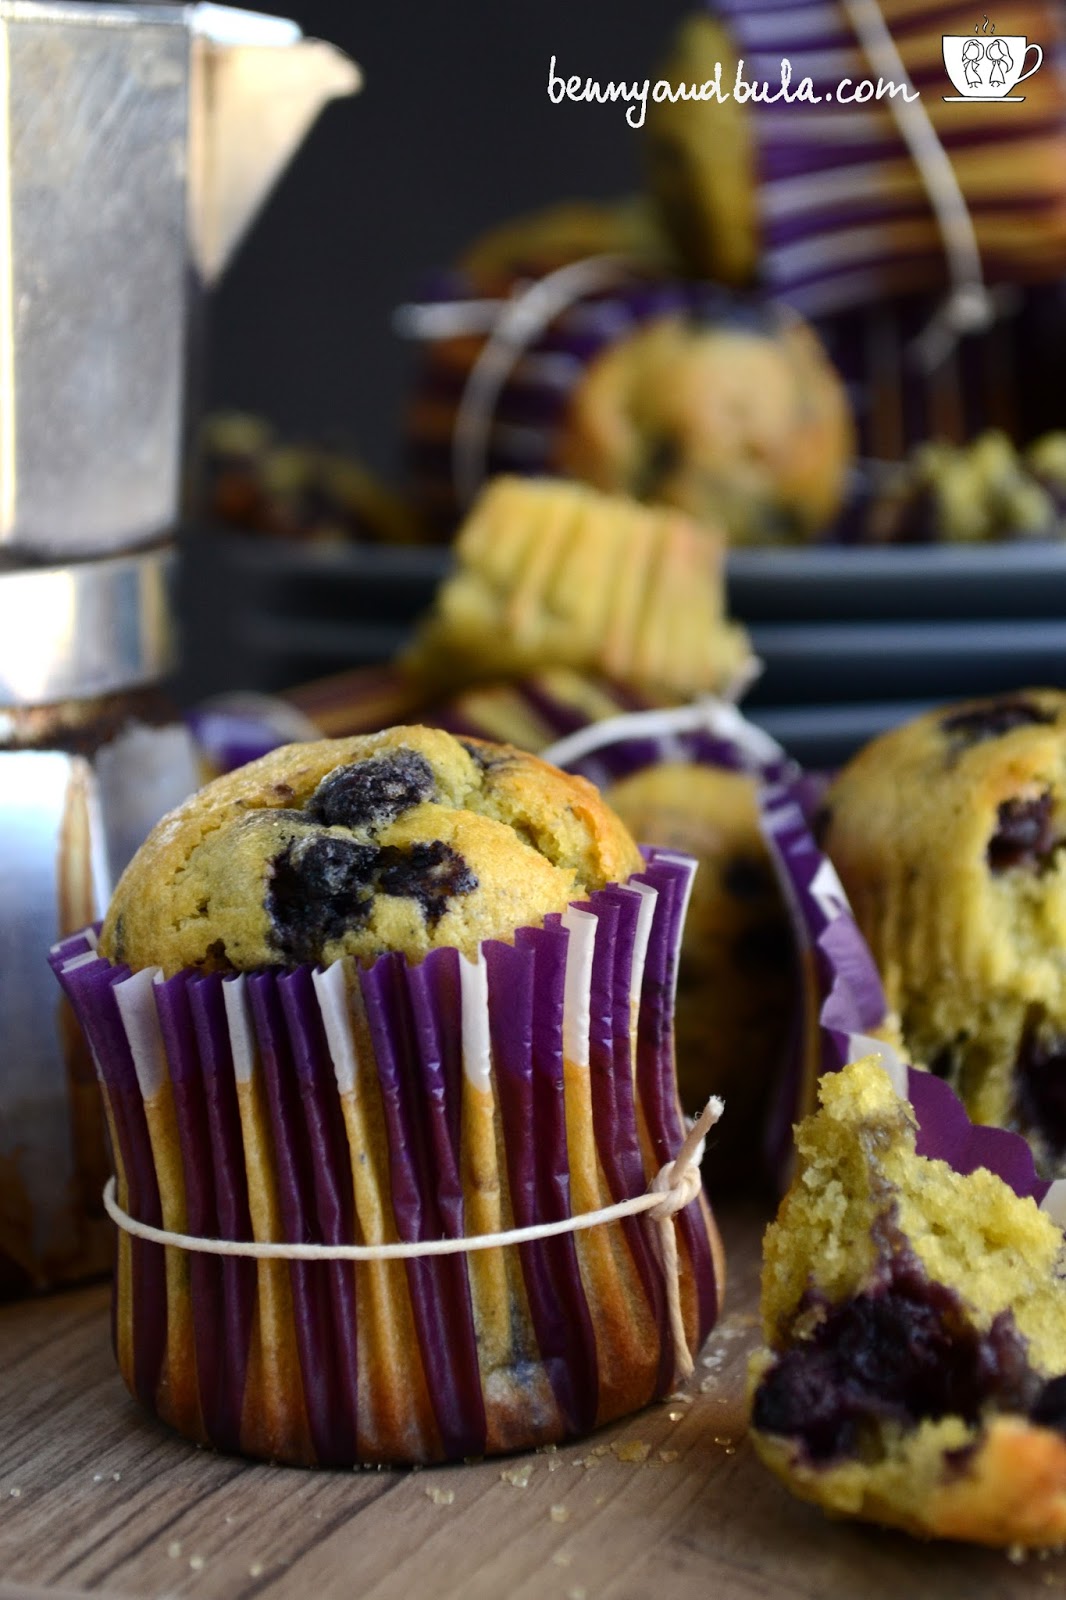 Ricetta muffin ai mirtilli/Blueberry muffins recipe